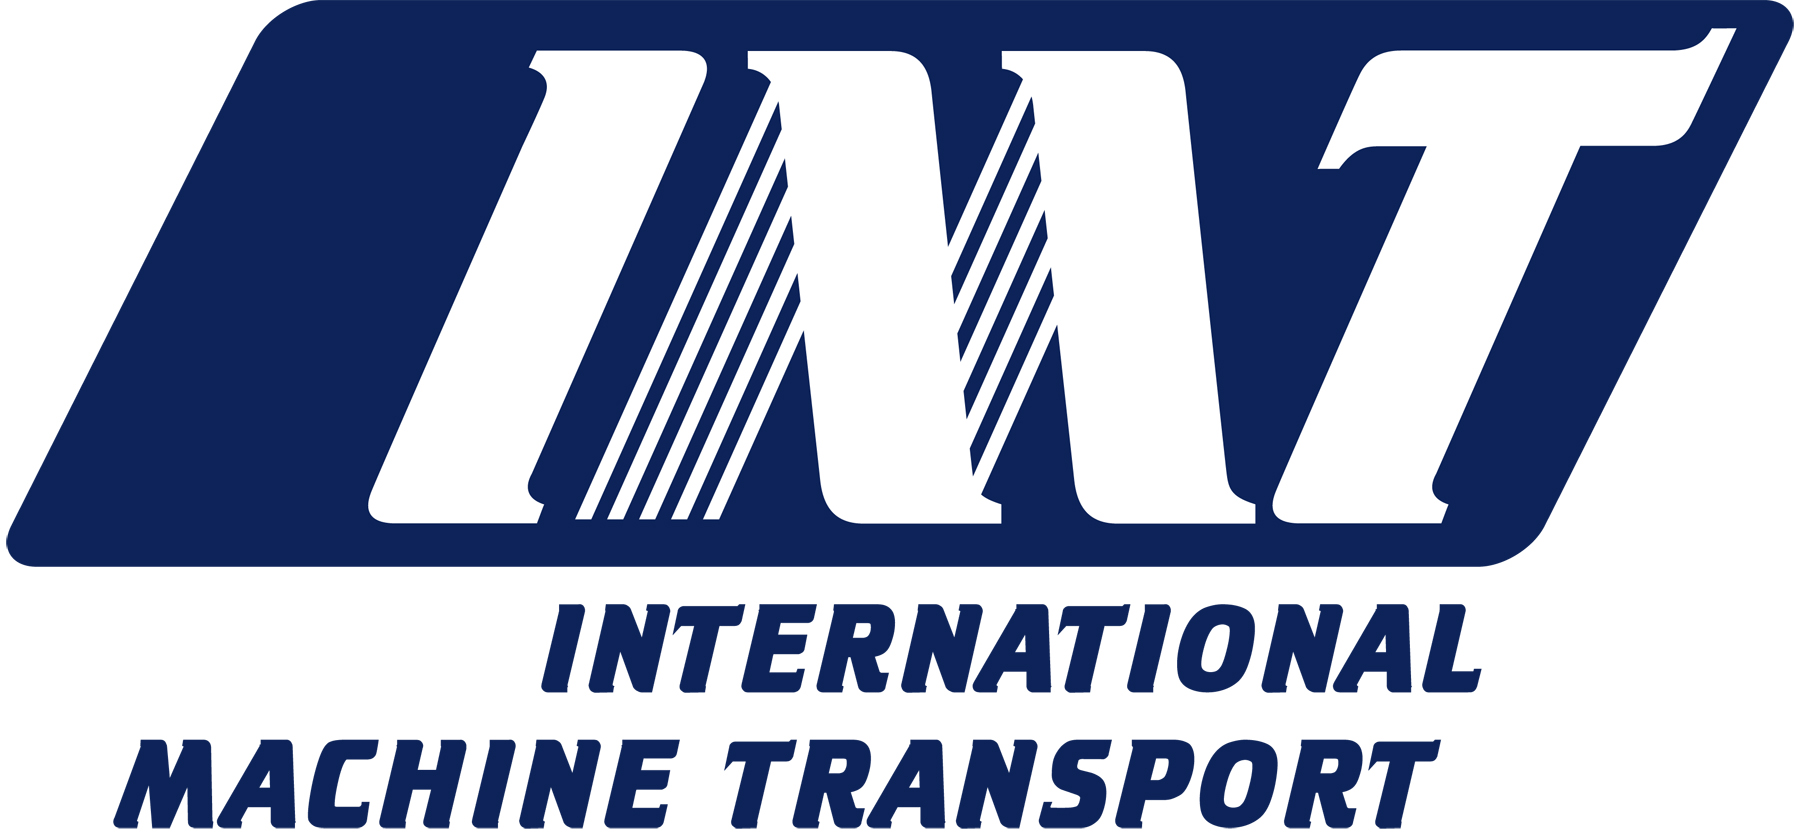 International Machine Transport